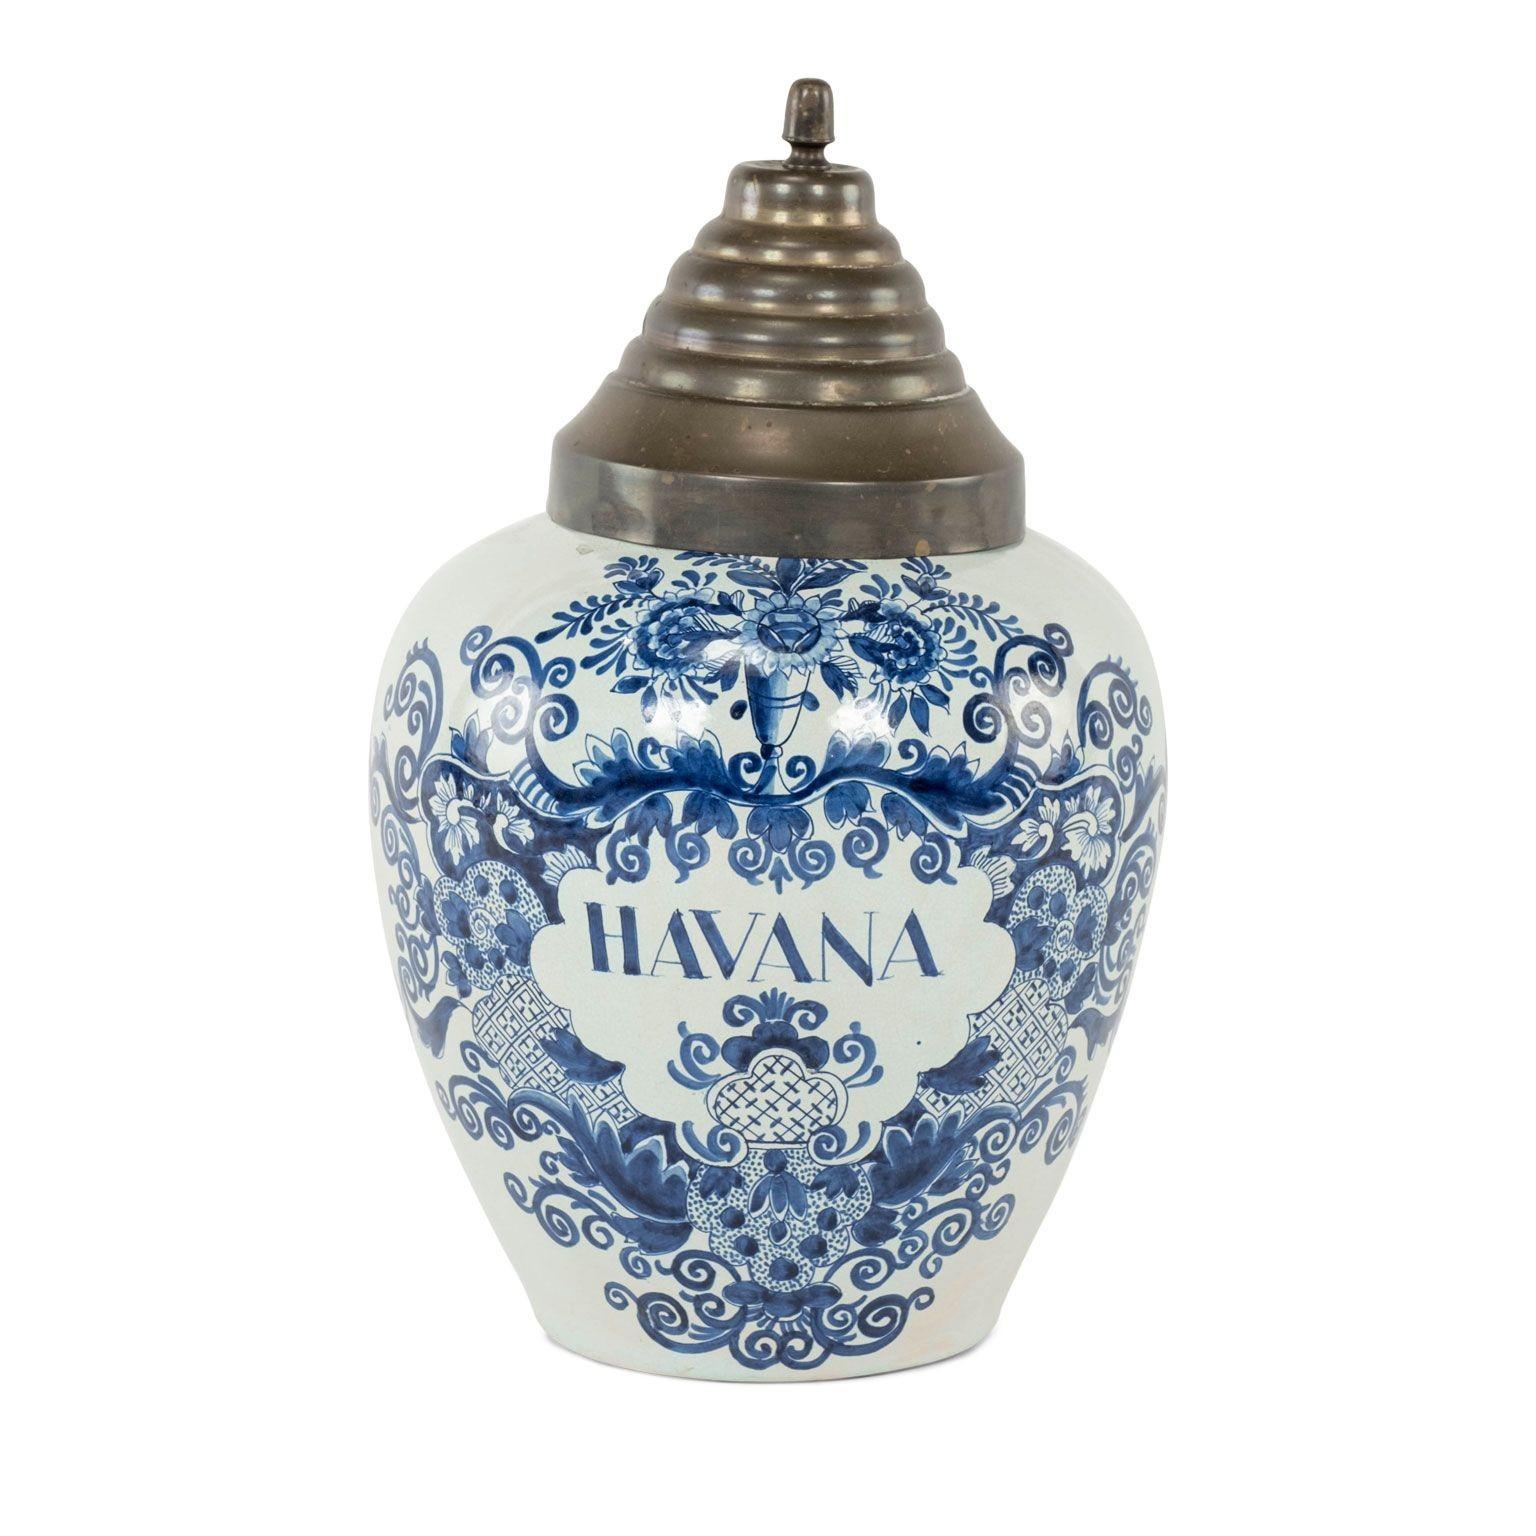 Delft Blue and White "Havana" Tobacco Jar For Sale